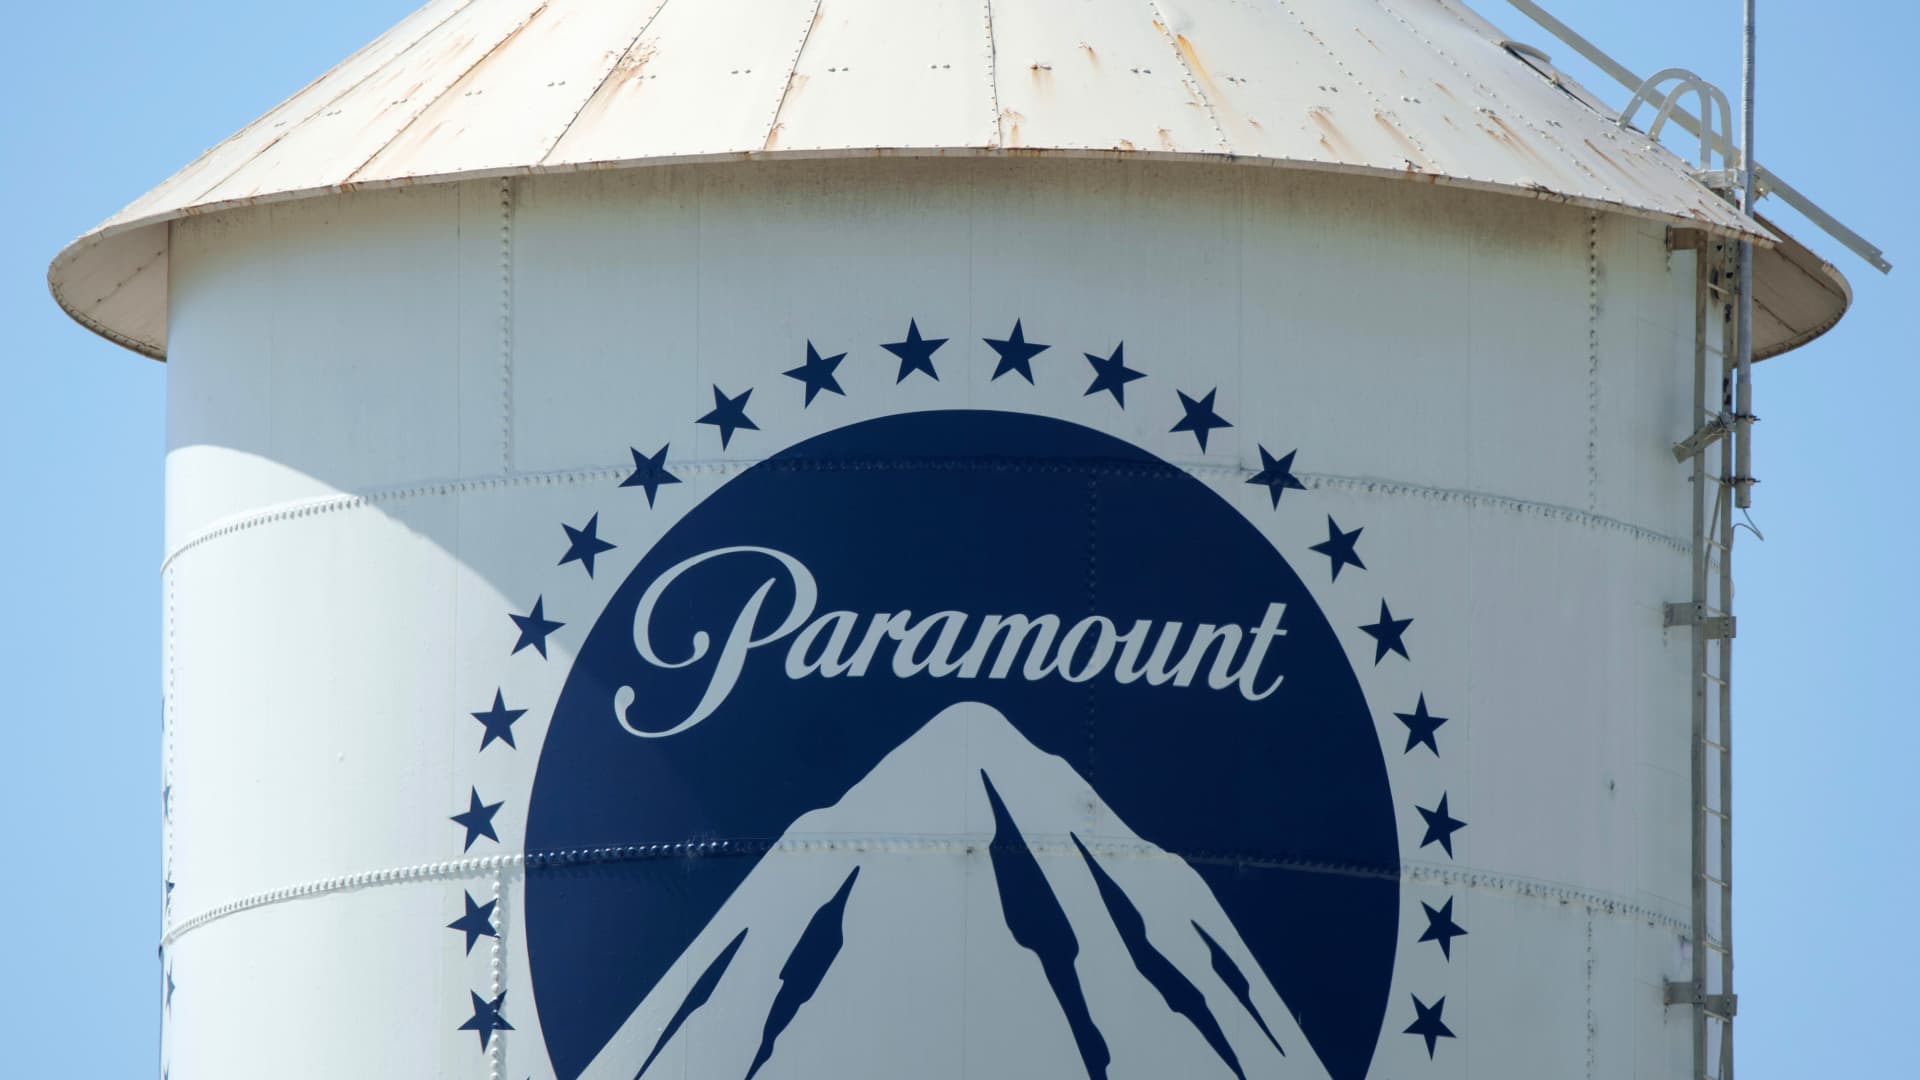 Paramount seeks streaming partner. Warner Bros. Discover is interested